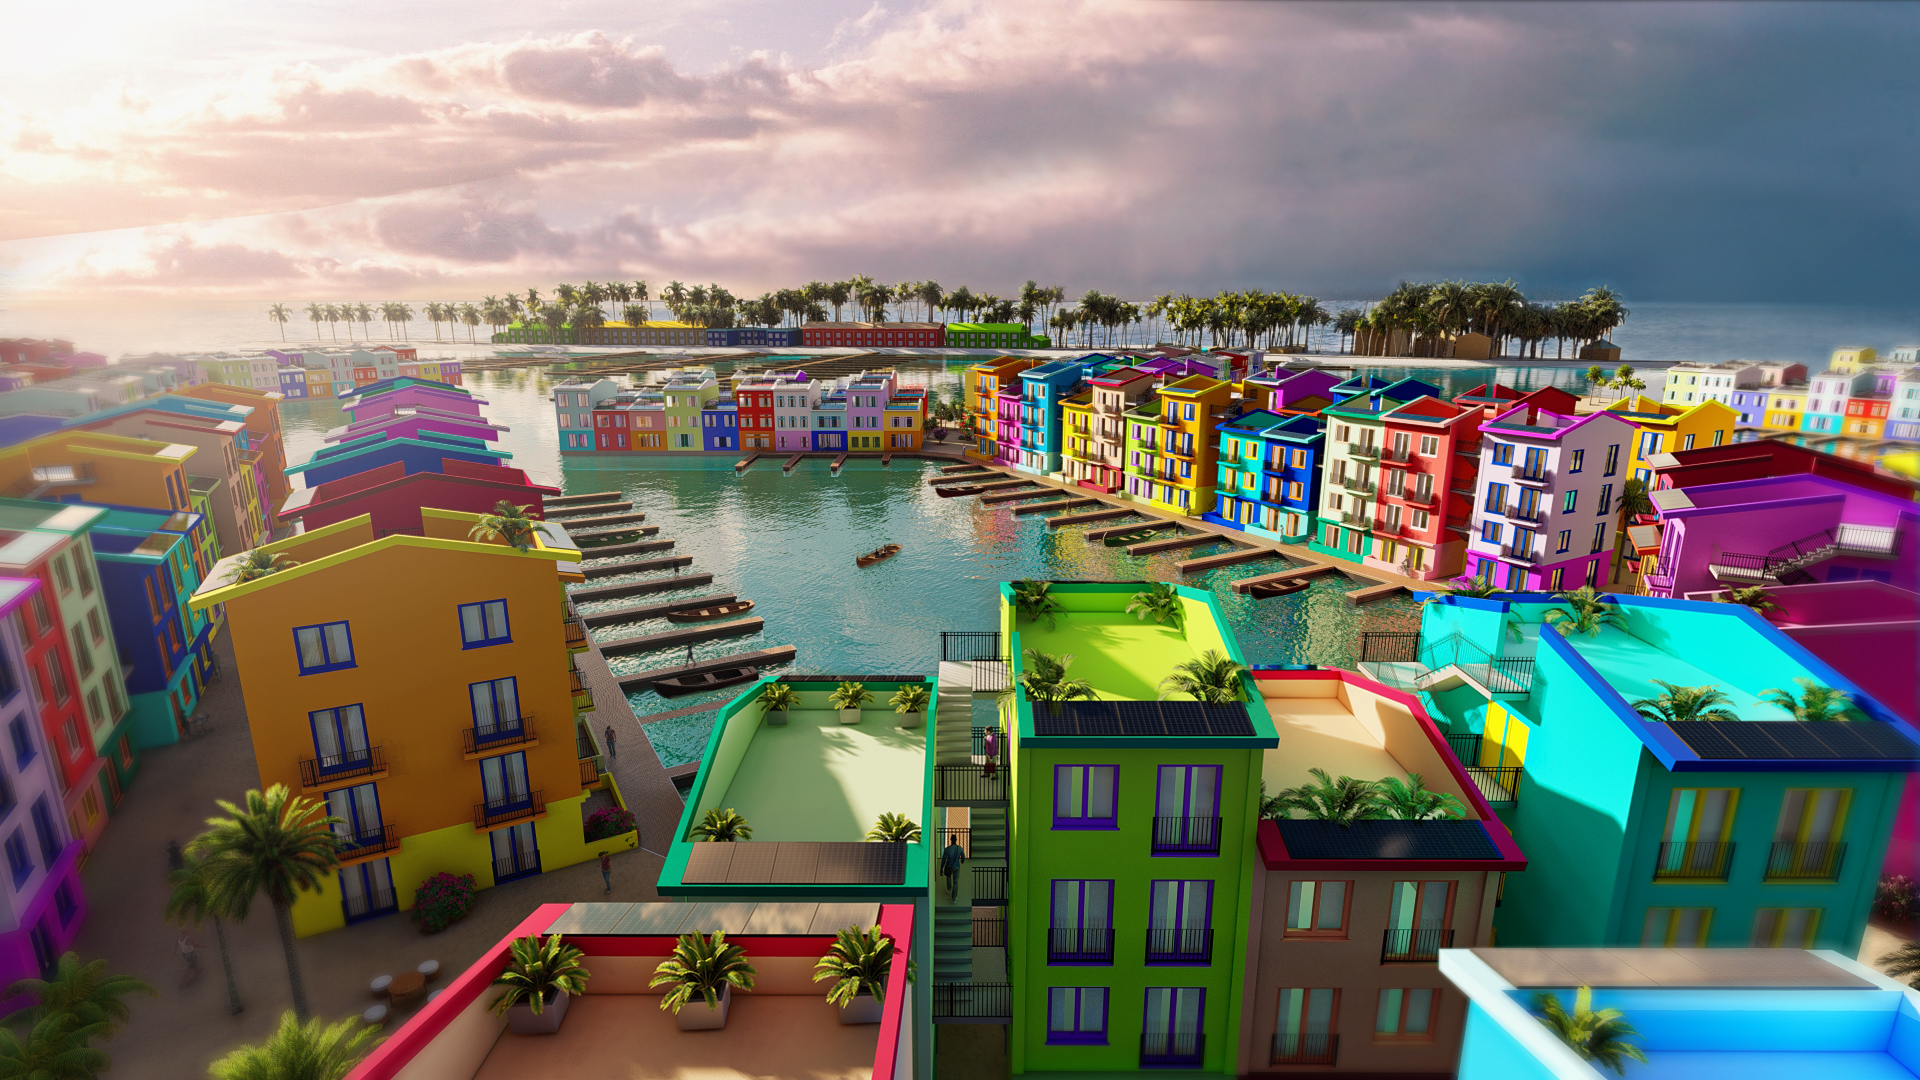 Cities of the Future：Maldives Floating City 智慧未來城市 - 藍色潟湖上的彩色城市